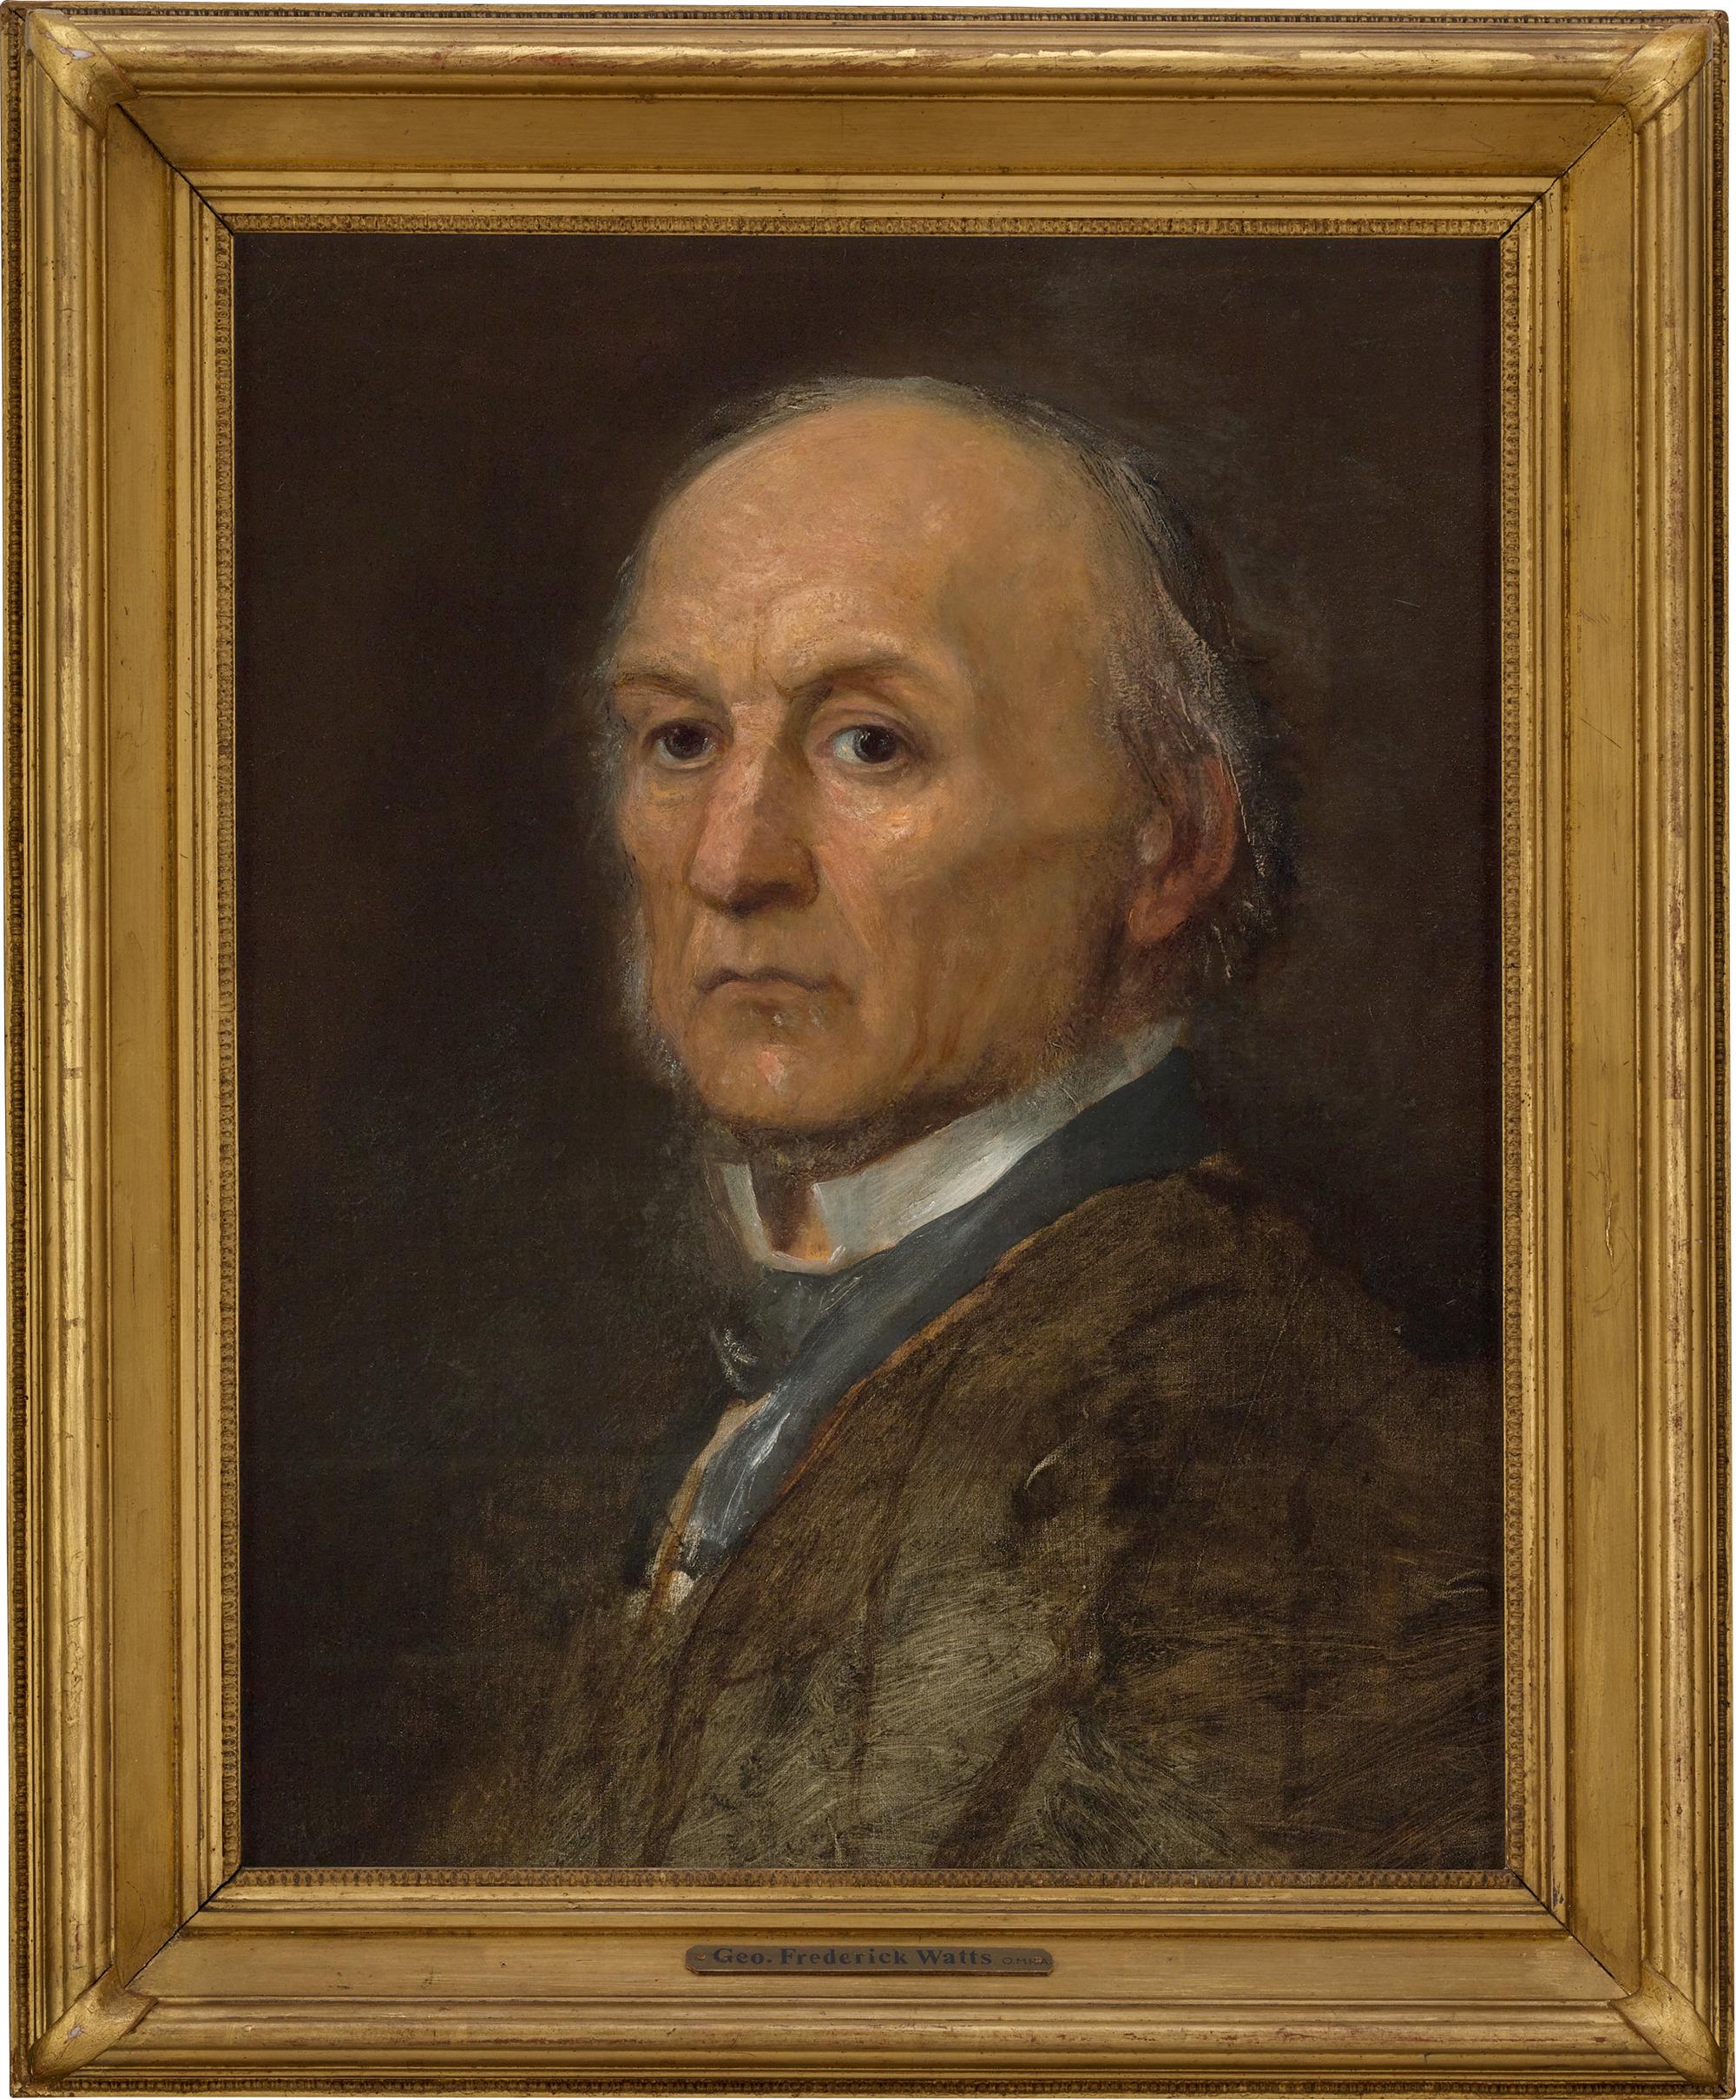 Portrait du Premier ministre William Ewart Gladstone par George Frederic Watts - Painting de George Frederic Watts OM RA